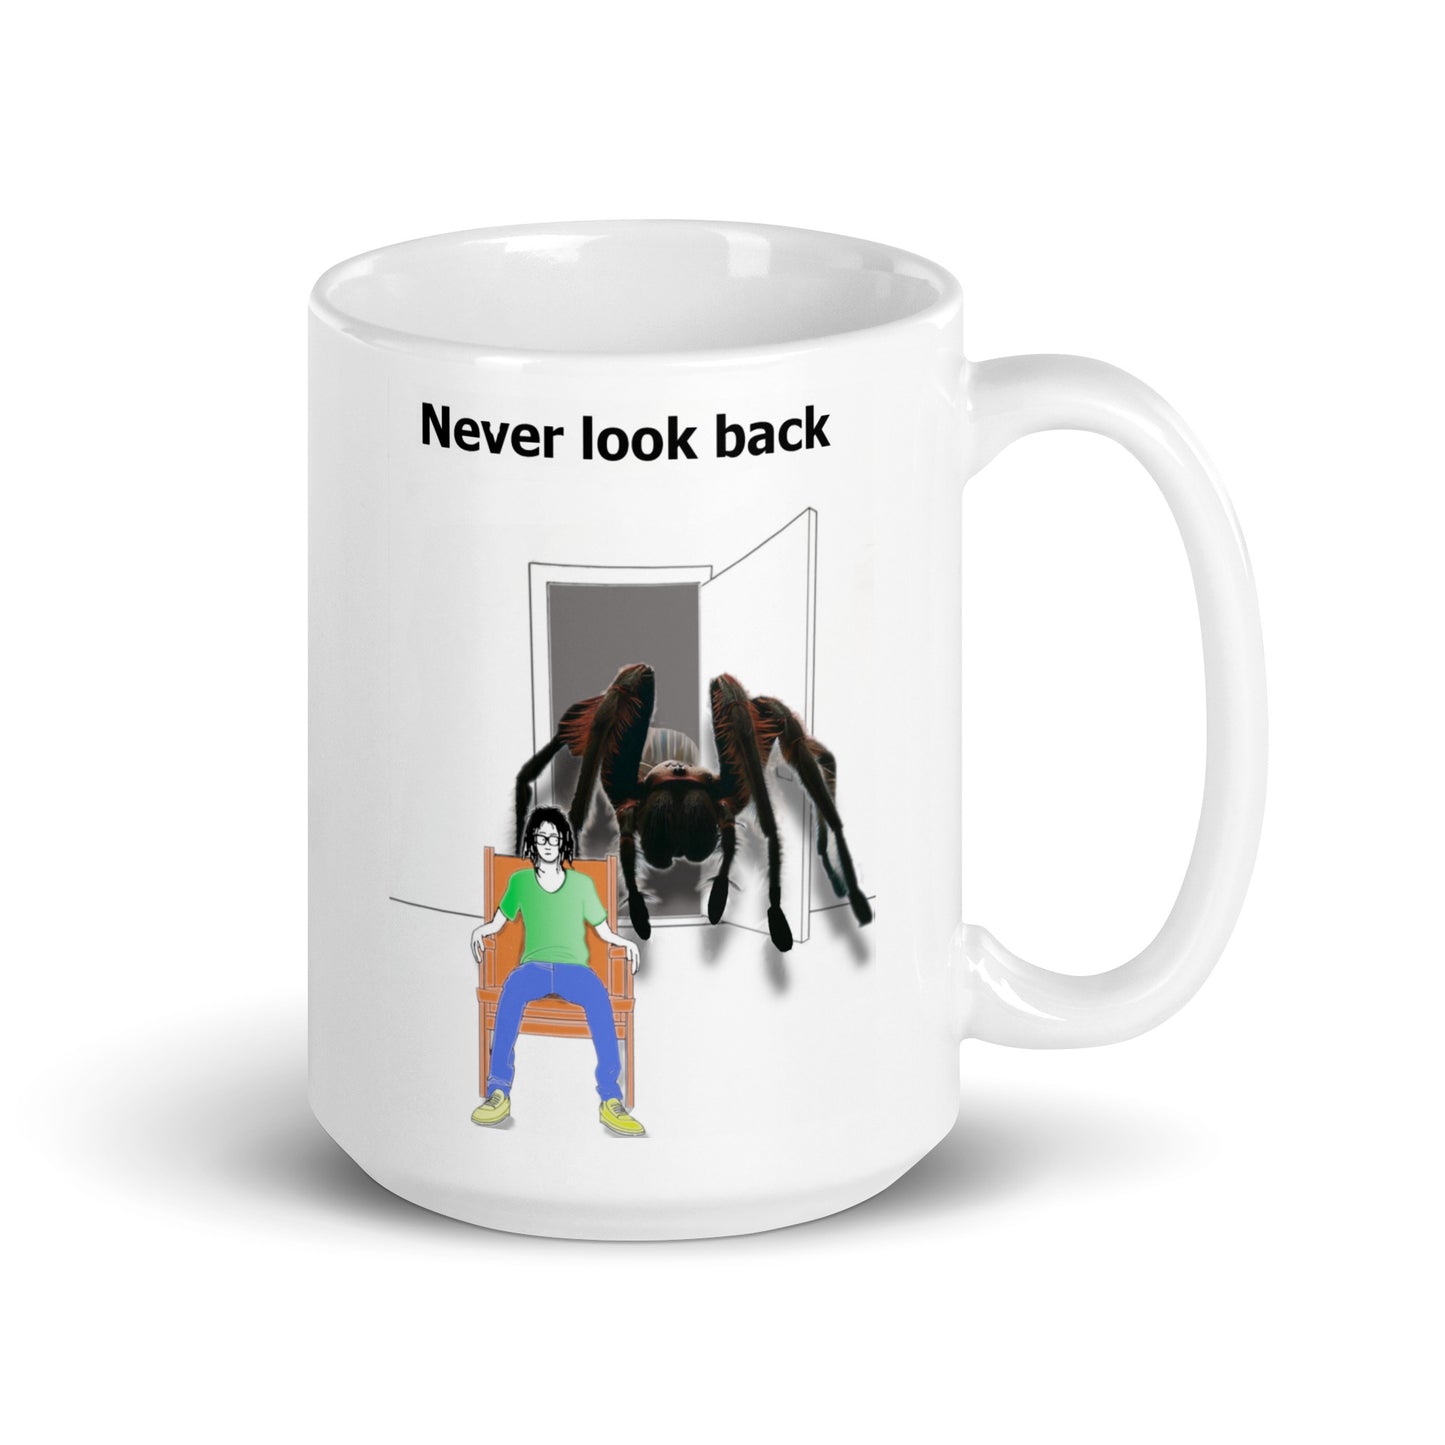 'Never look back' Coffee Mug